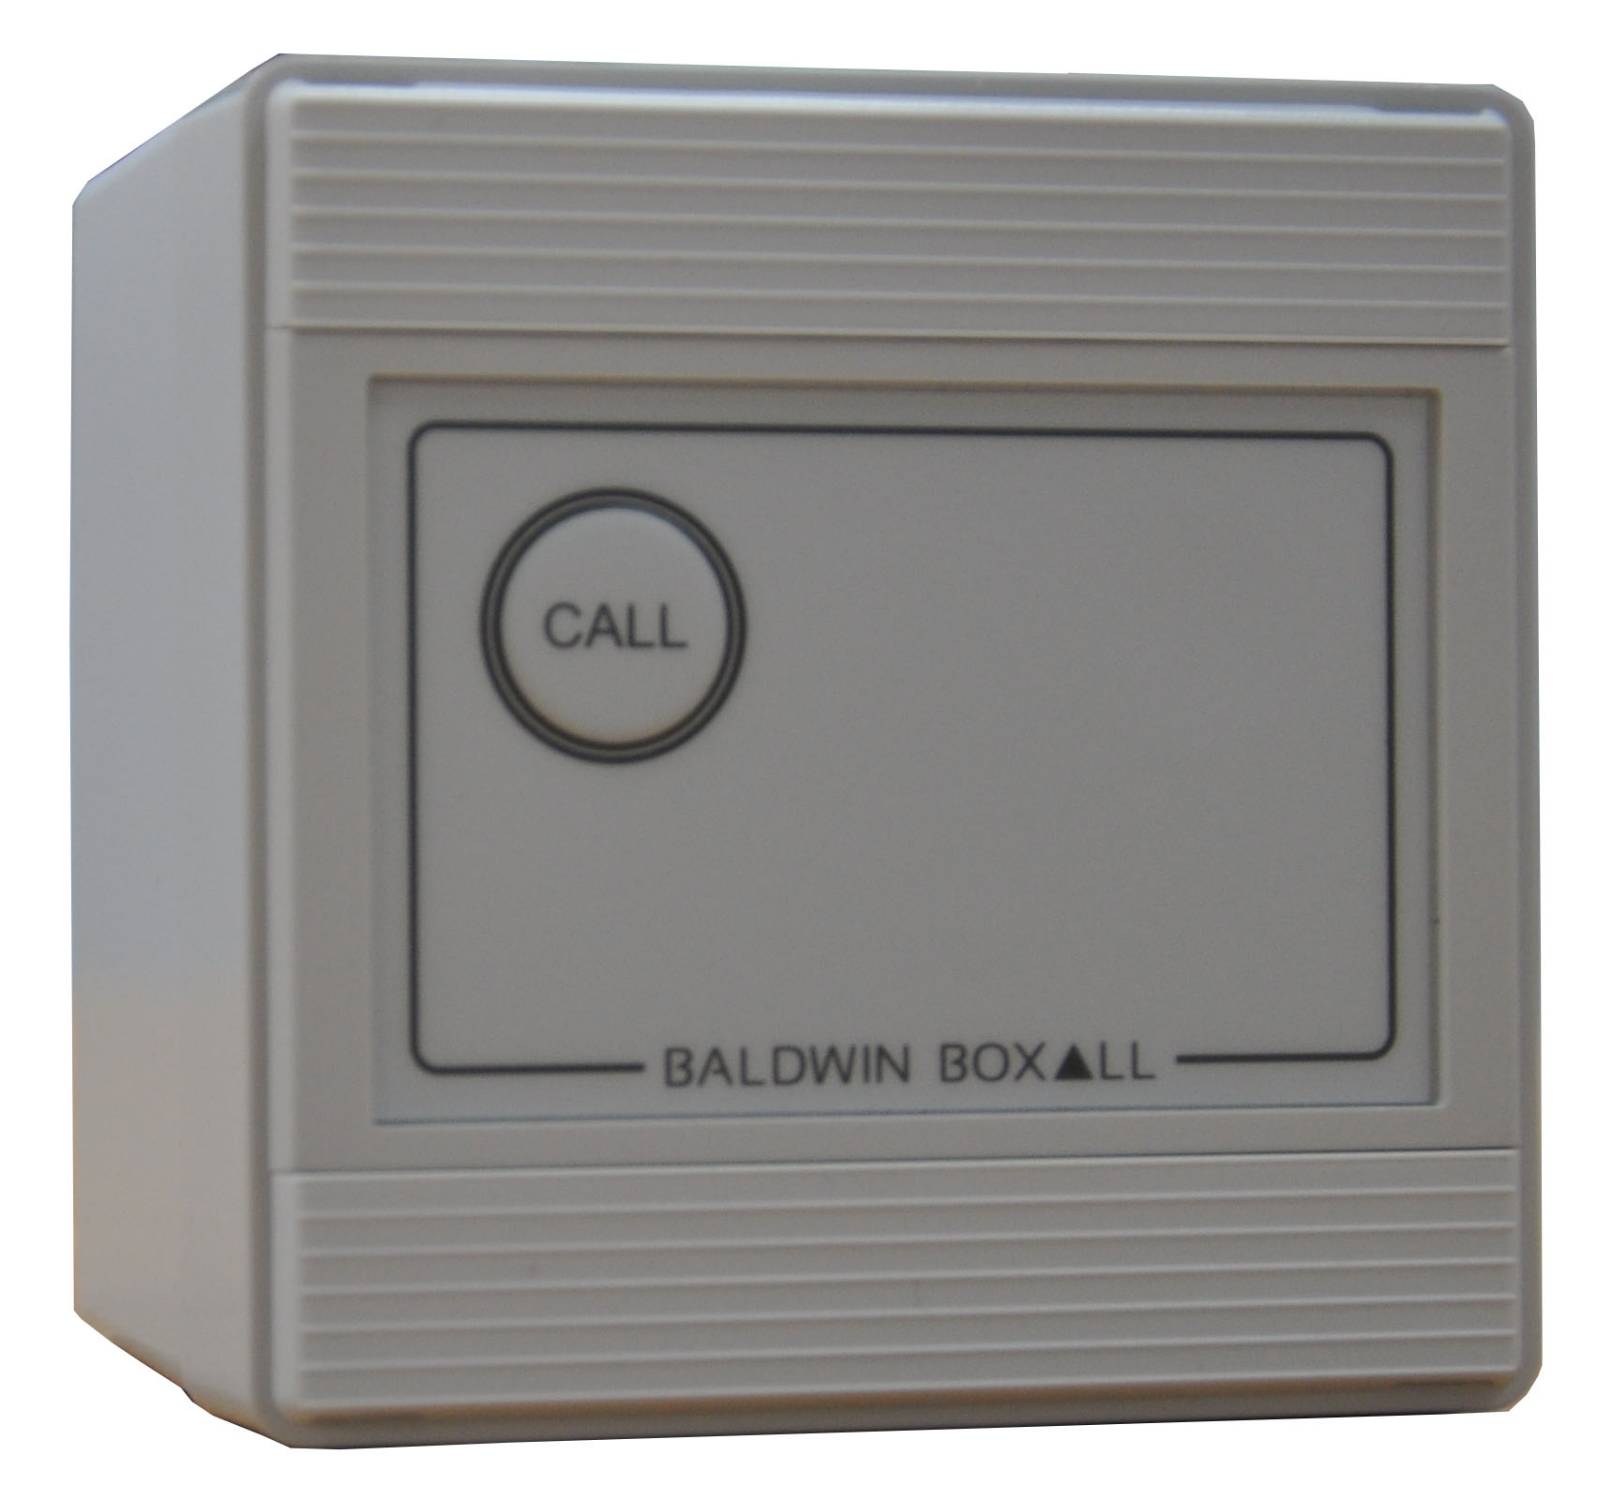 IP65 toilet alarm call button